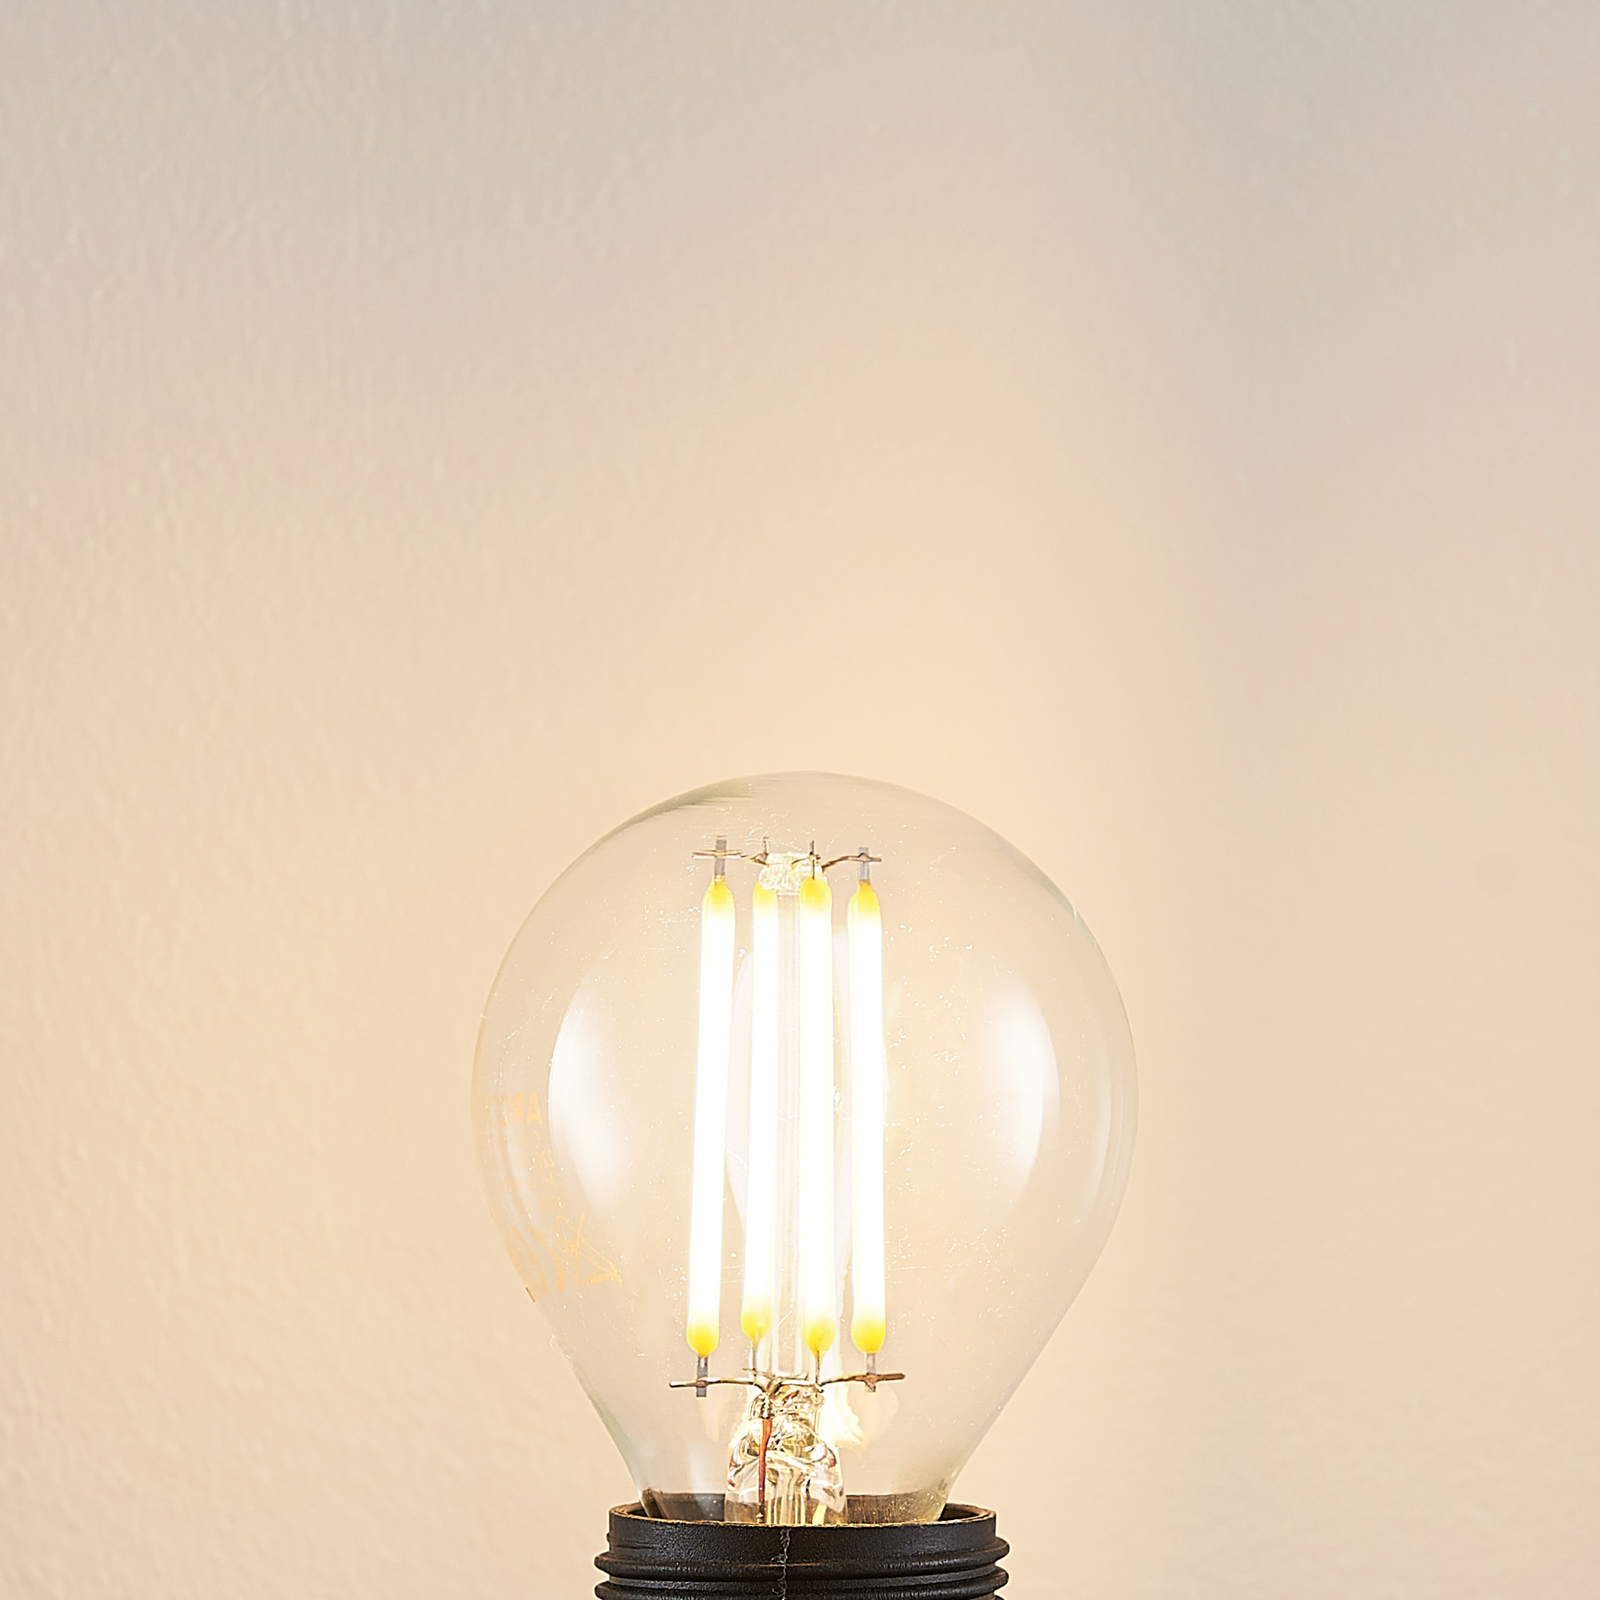 LED lamp E14 P45 4W helder 3-Stepdim 2 per set